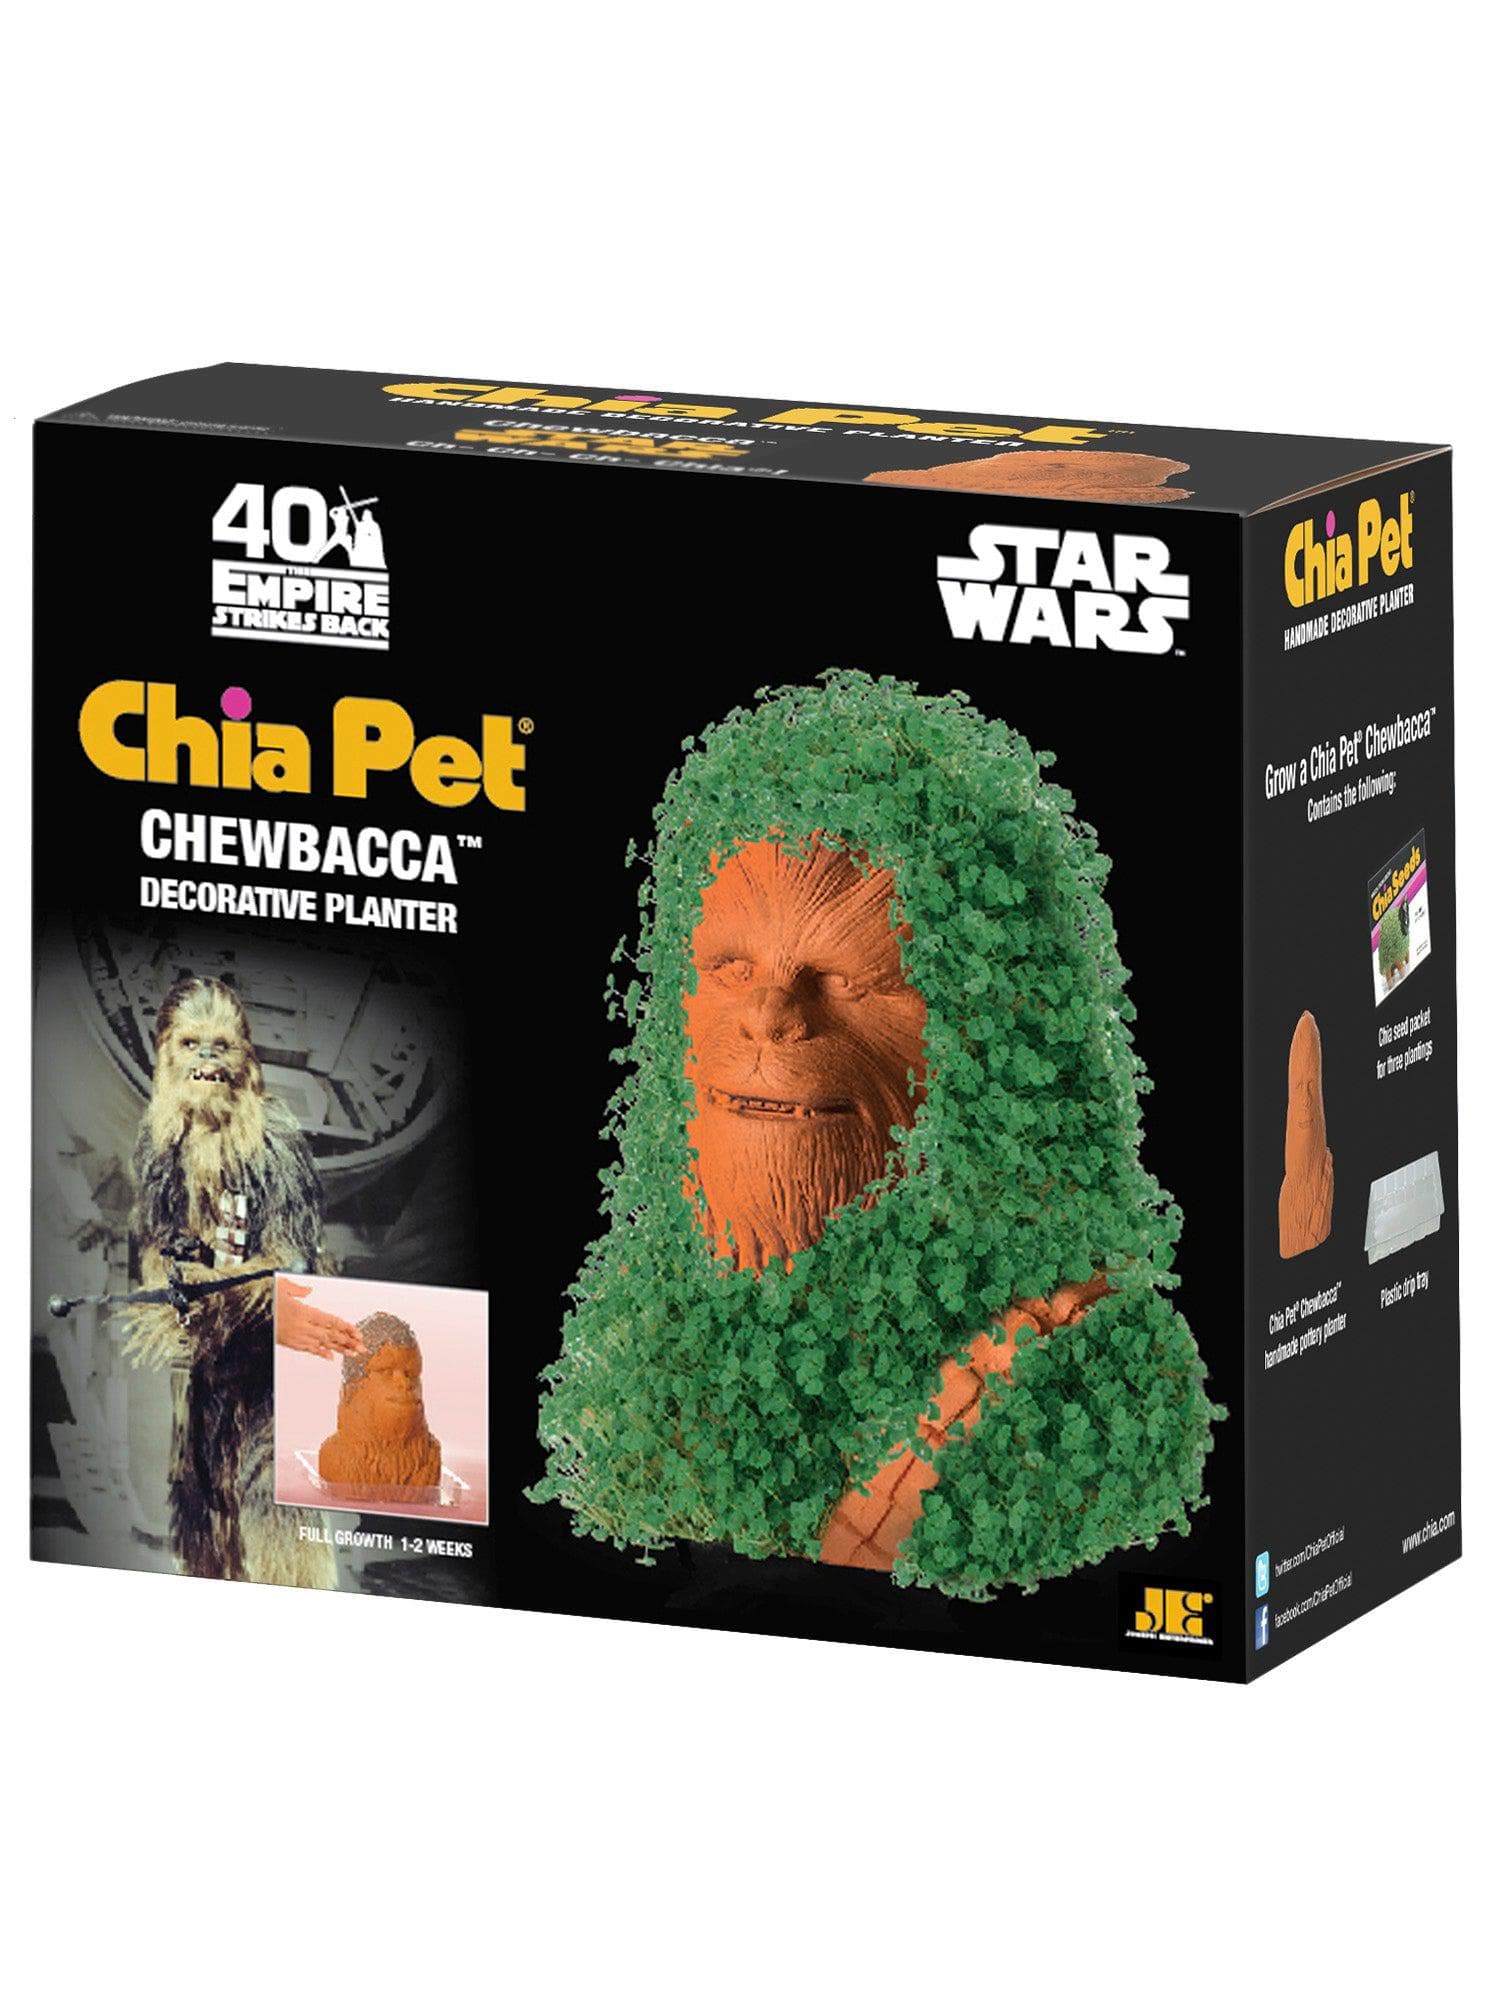 Chia Pet - Star Wars Chewbacca - costumes.com